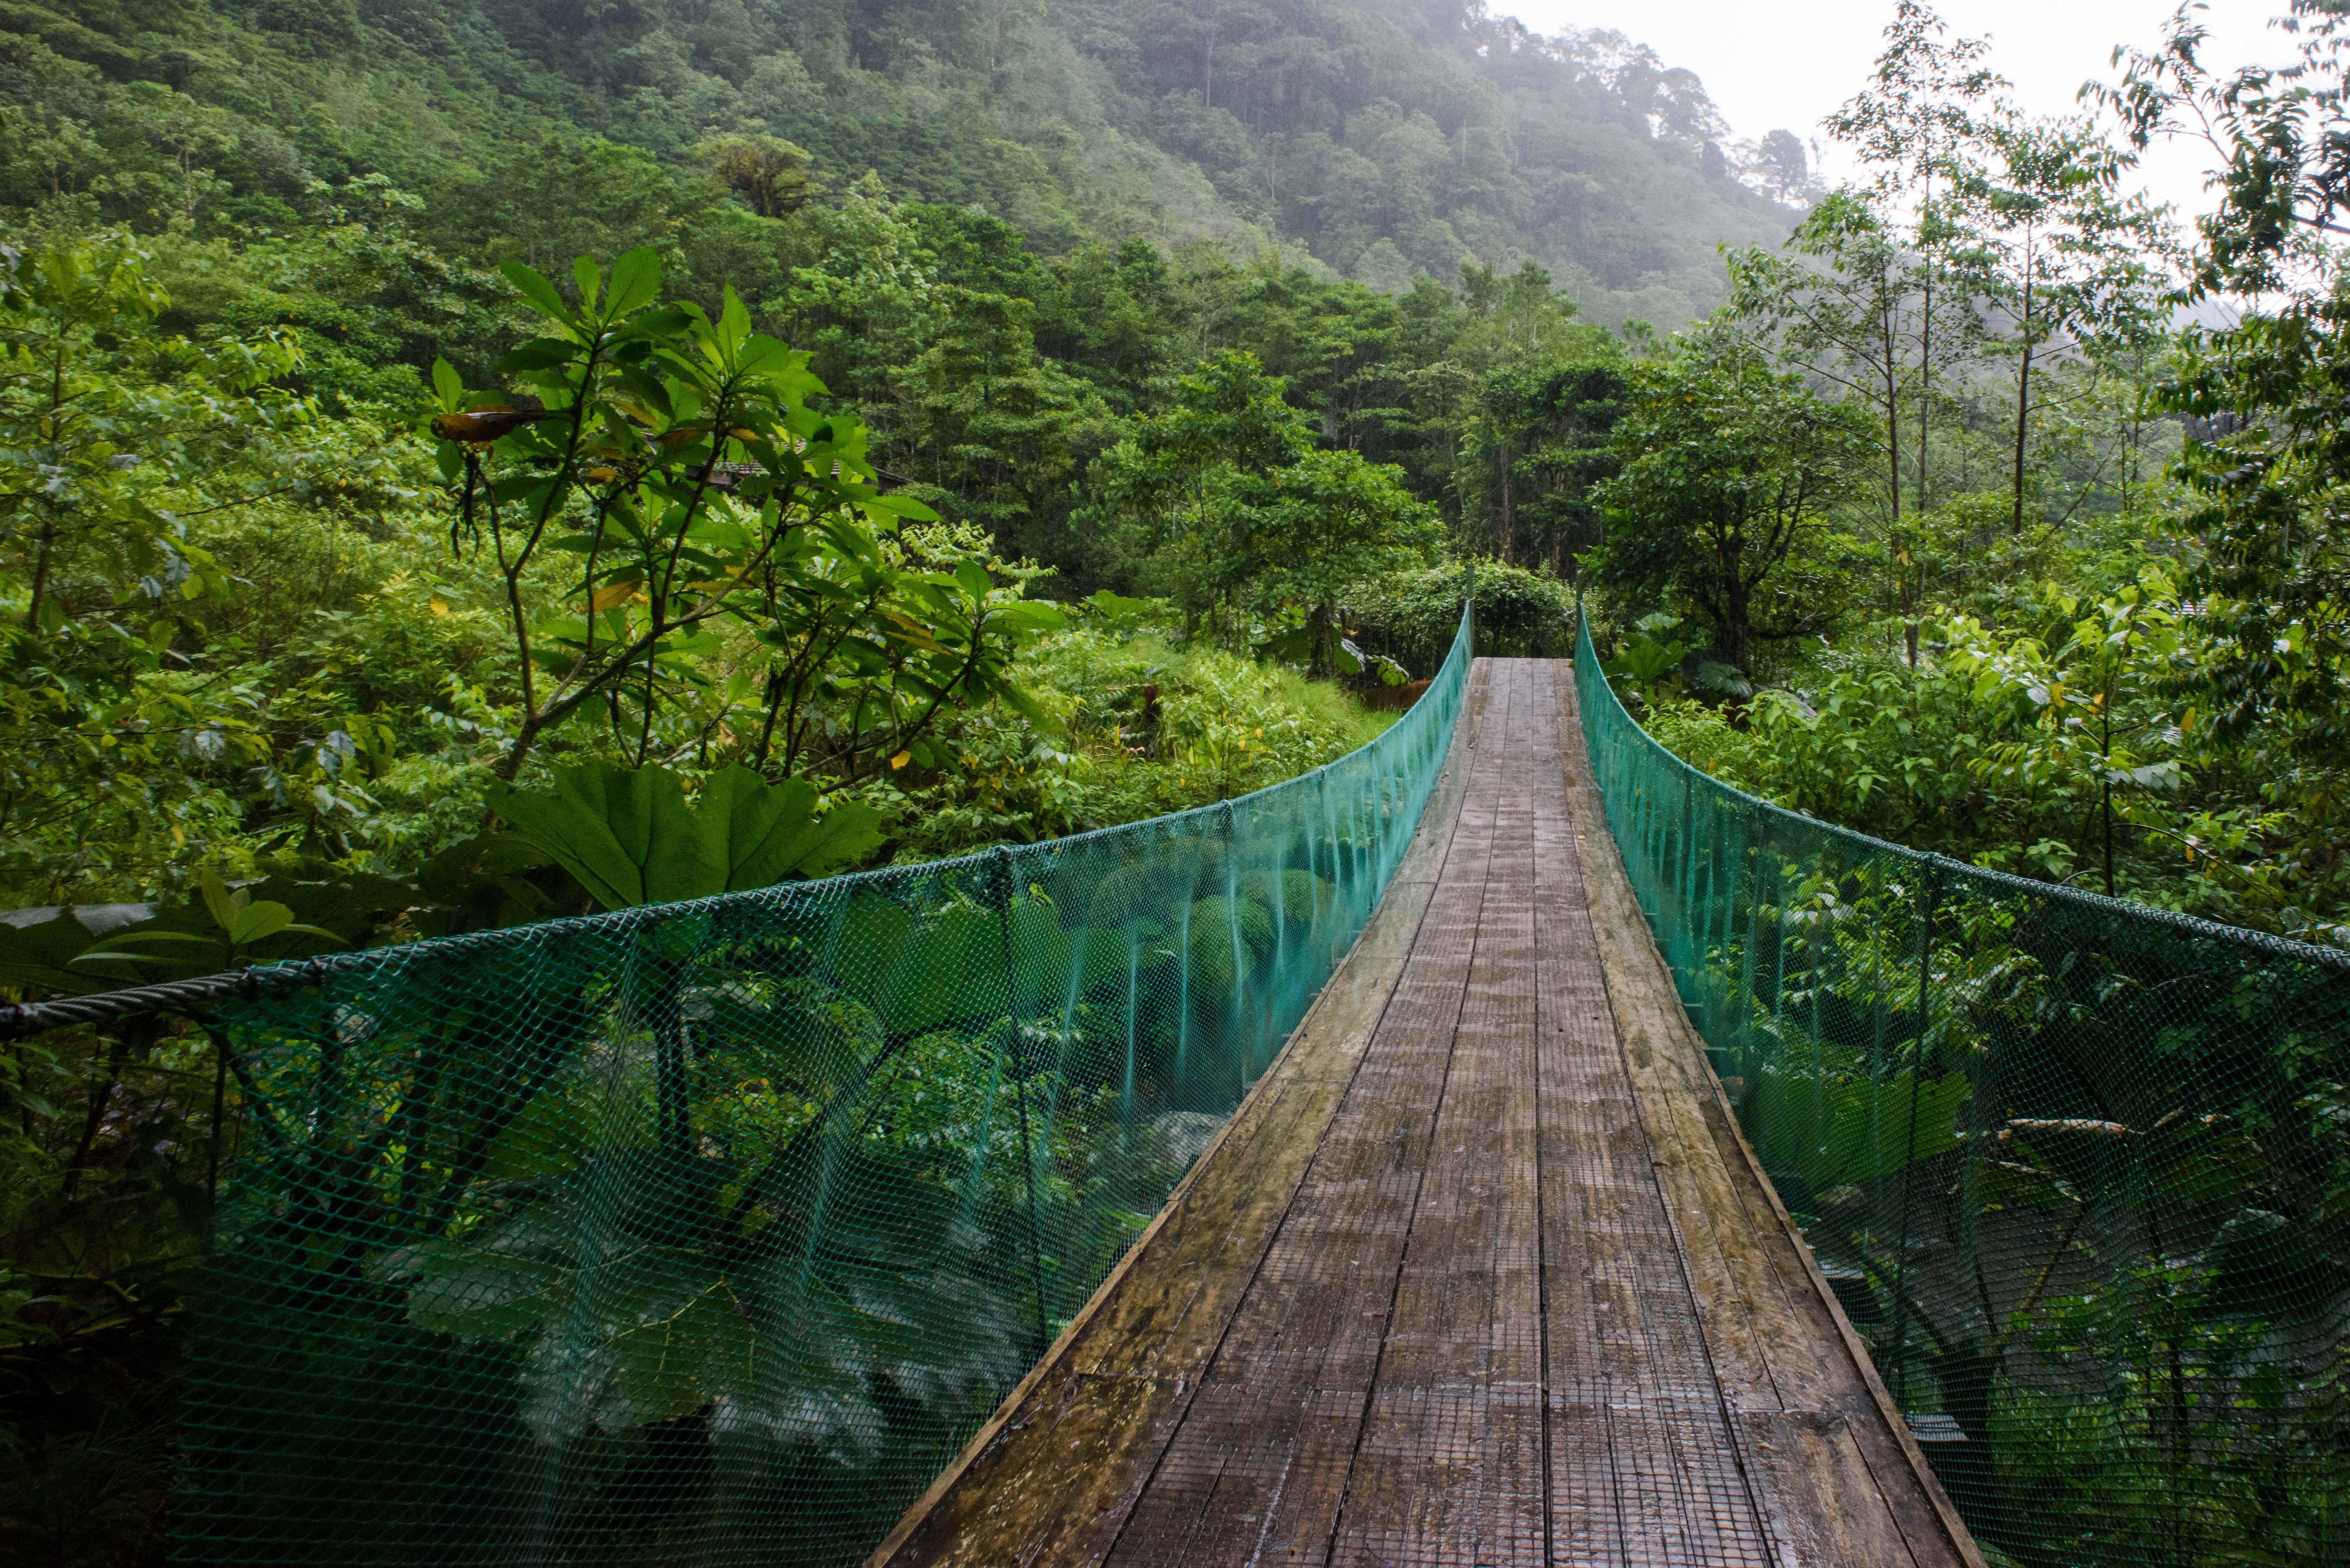 Suspension bridge in the rain forest cloud forest jungle.